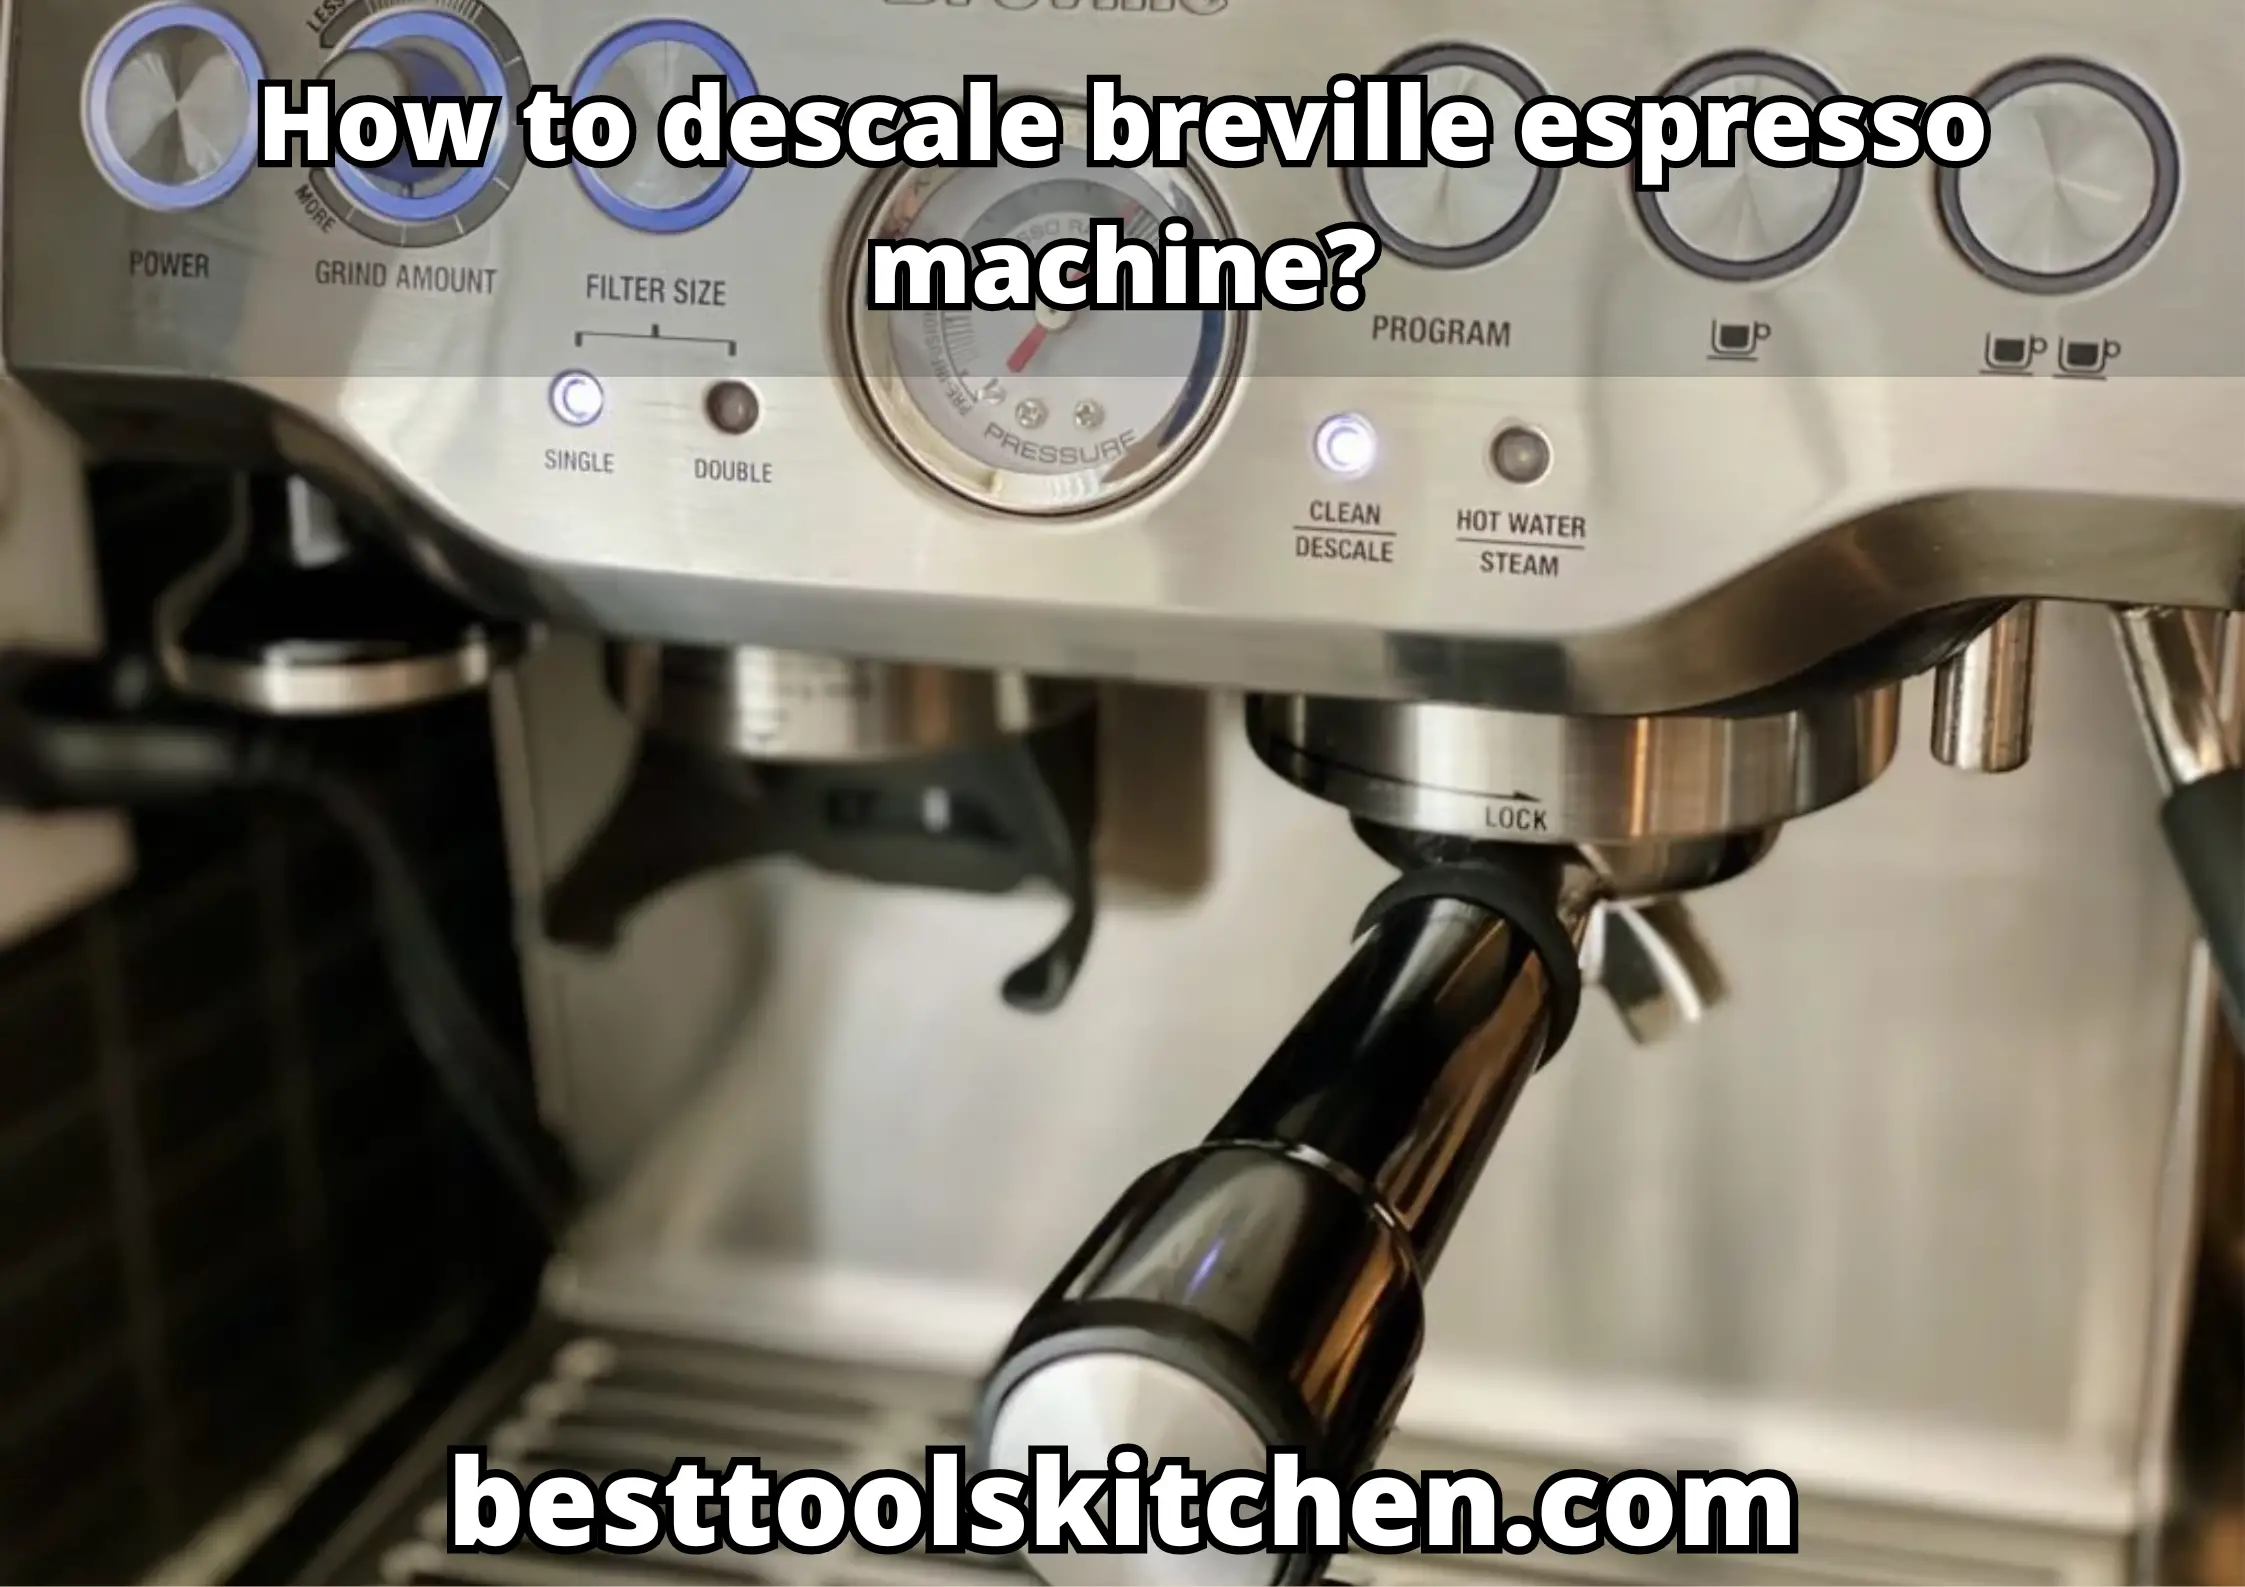 How to descale breville espresso machine? Explained